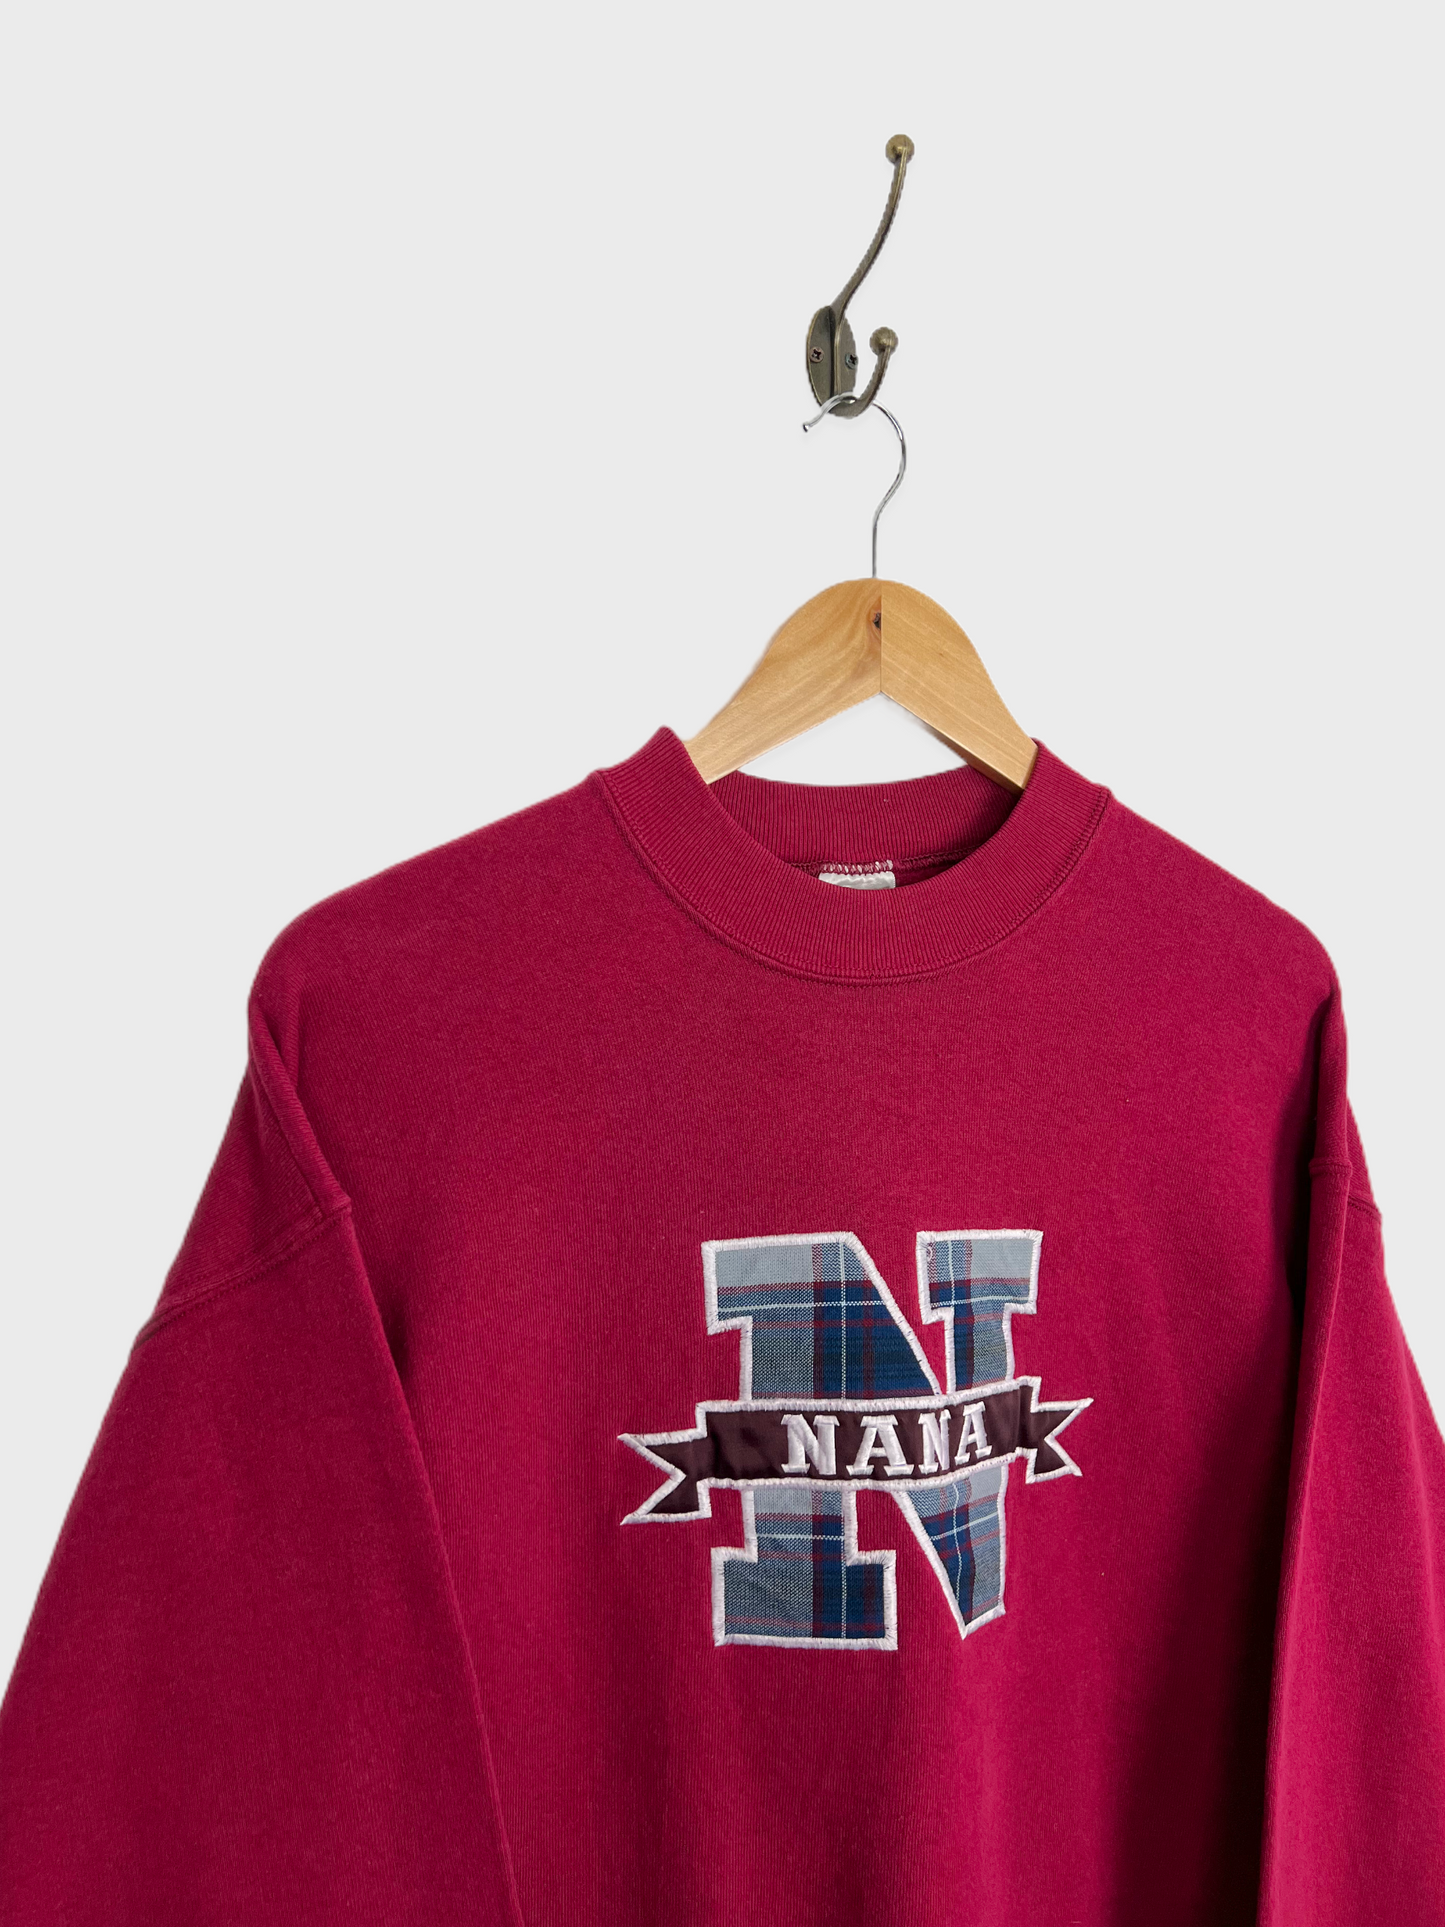 90's Nana Embroidered USA Made Vintage Sweatshirt Size S-M